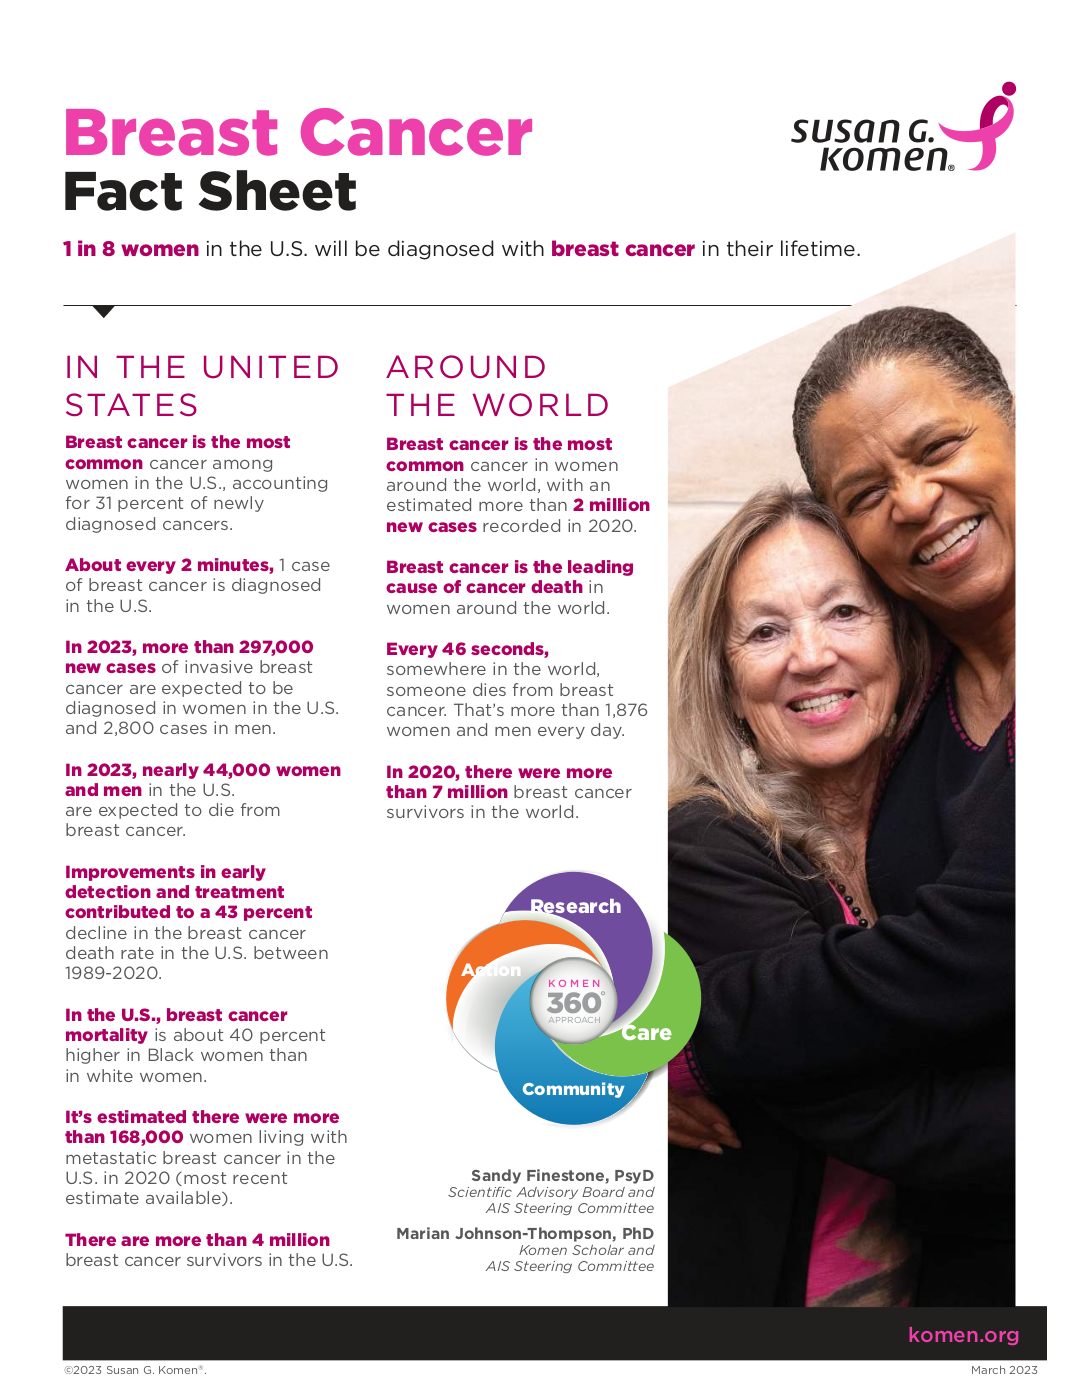 Susan G Komen Foundation Breast Cancer Fact Sheet